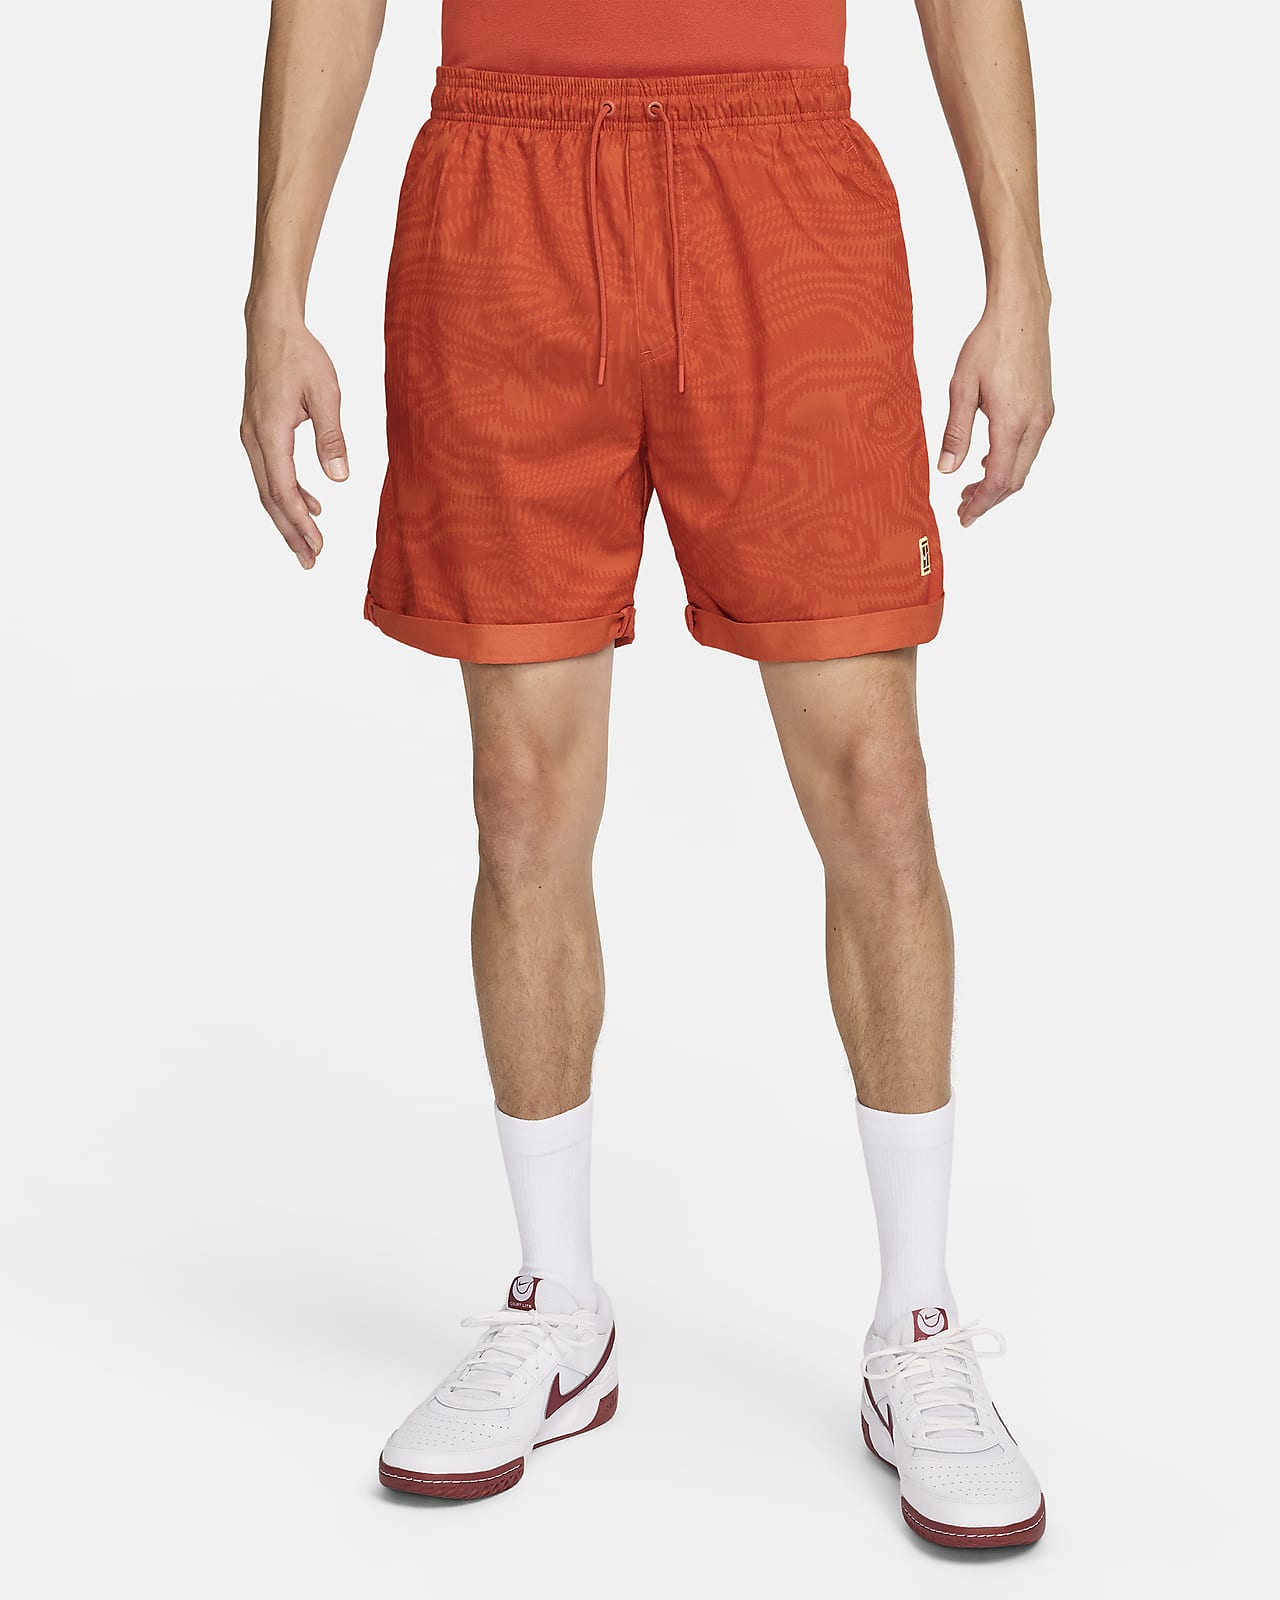 NikeCourt Heritage Men's 15cm (approx.) Dri-FIT Tennis Shorts